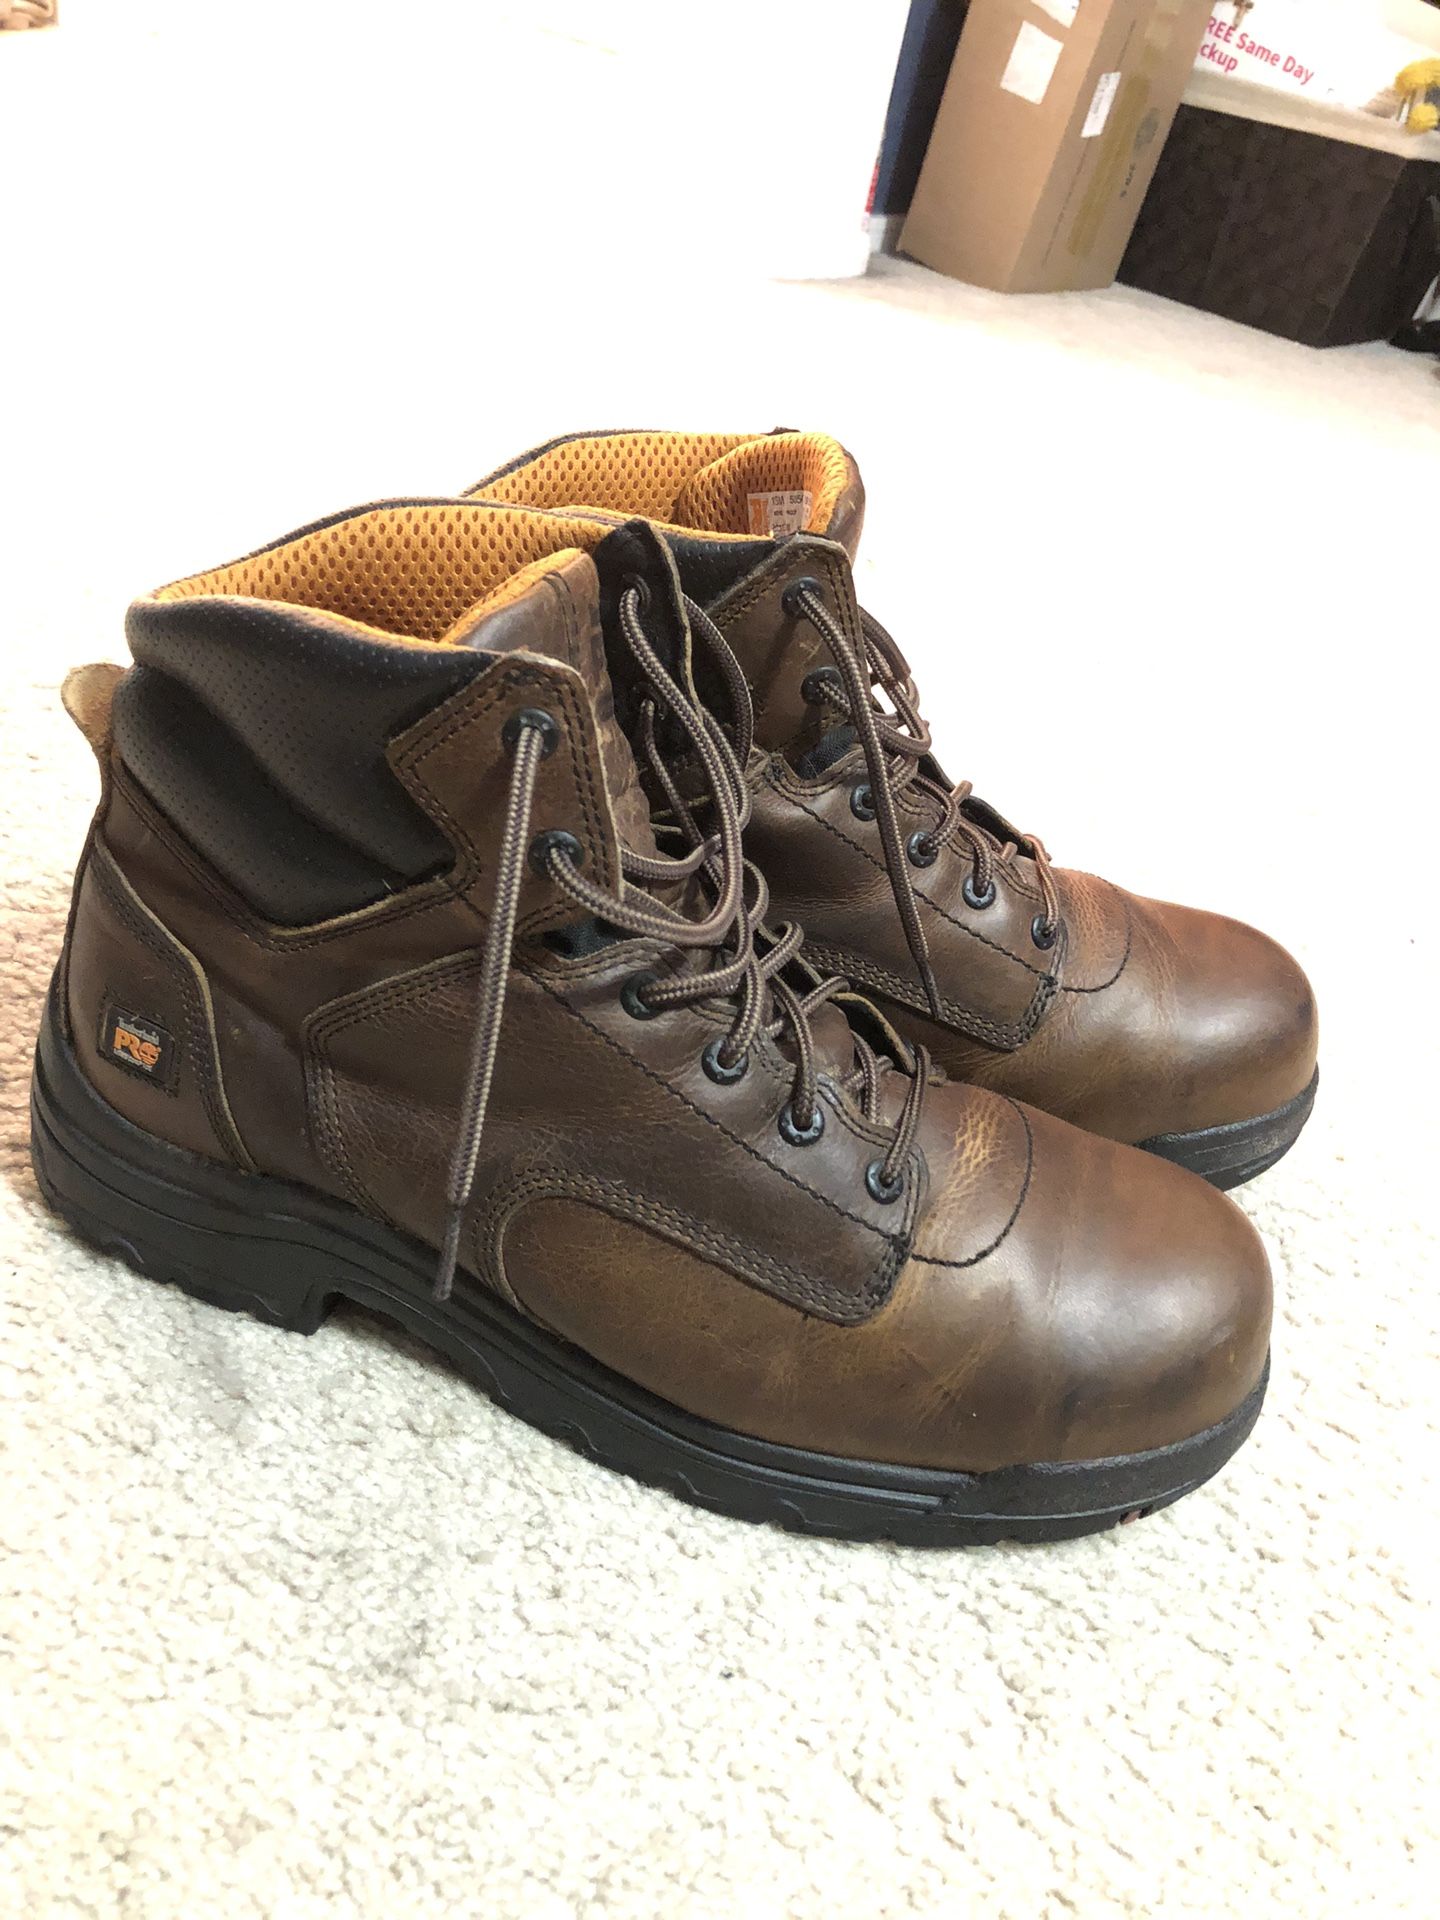 Timberland Pro Steel Toe boots